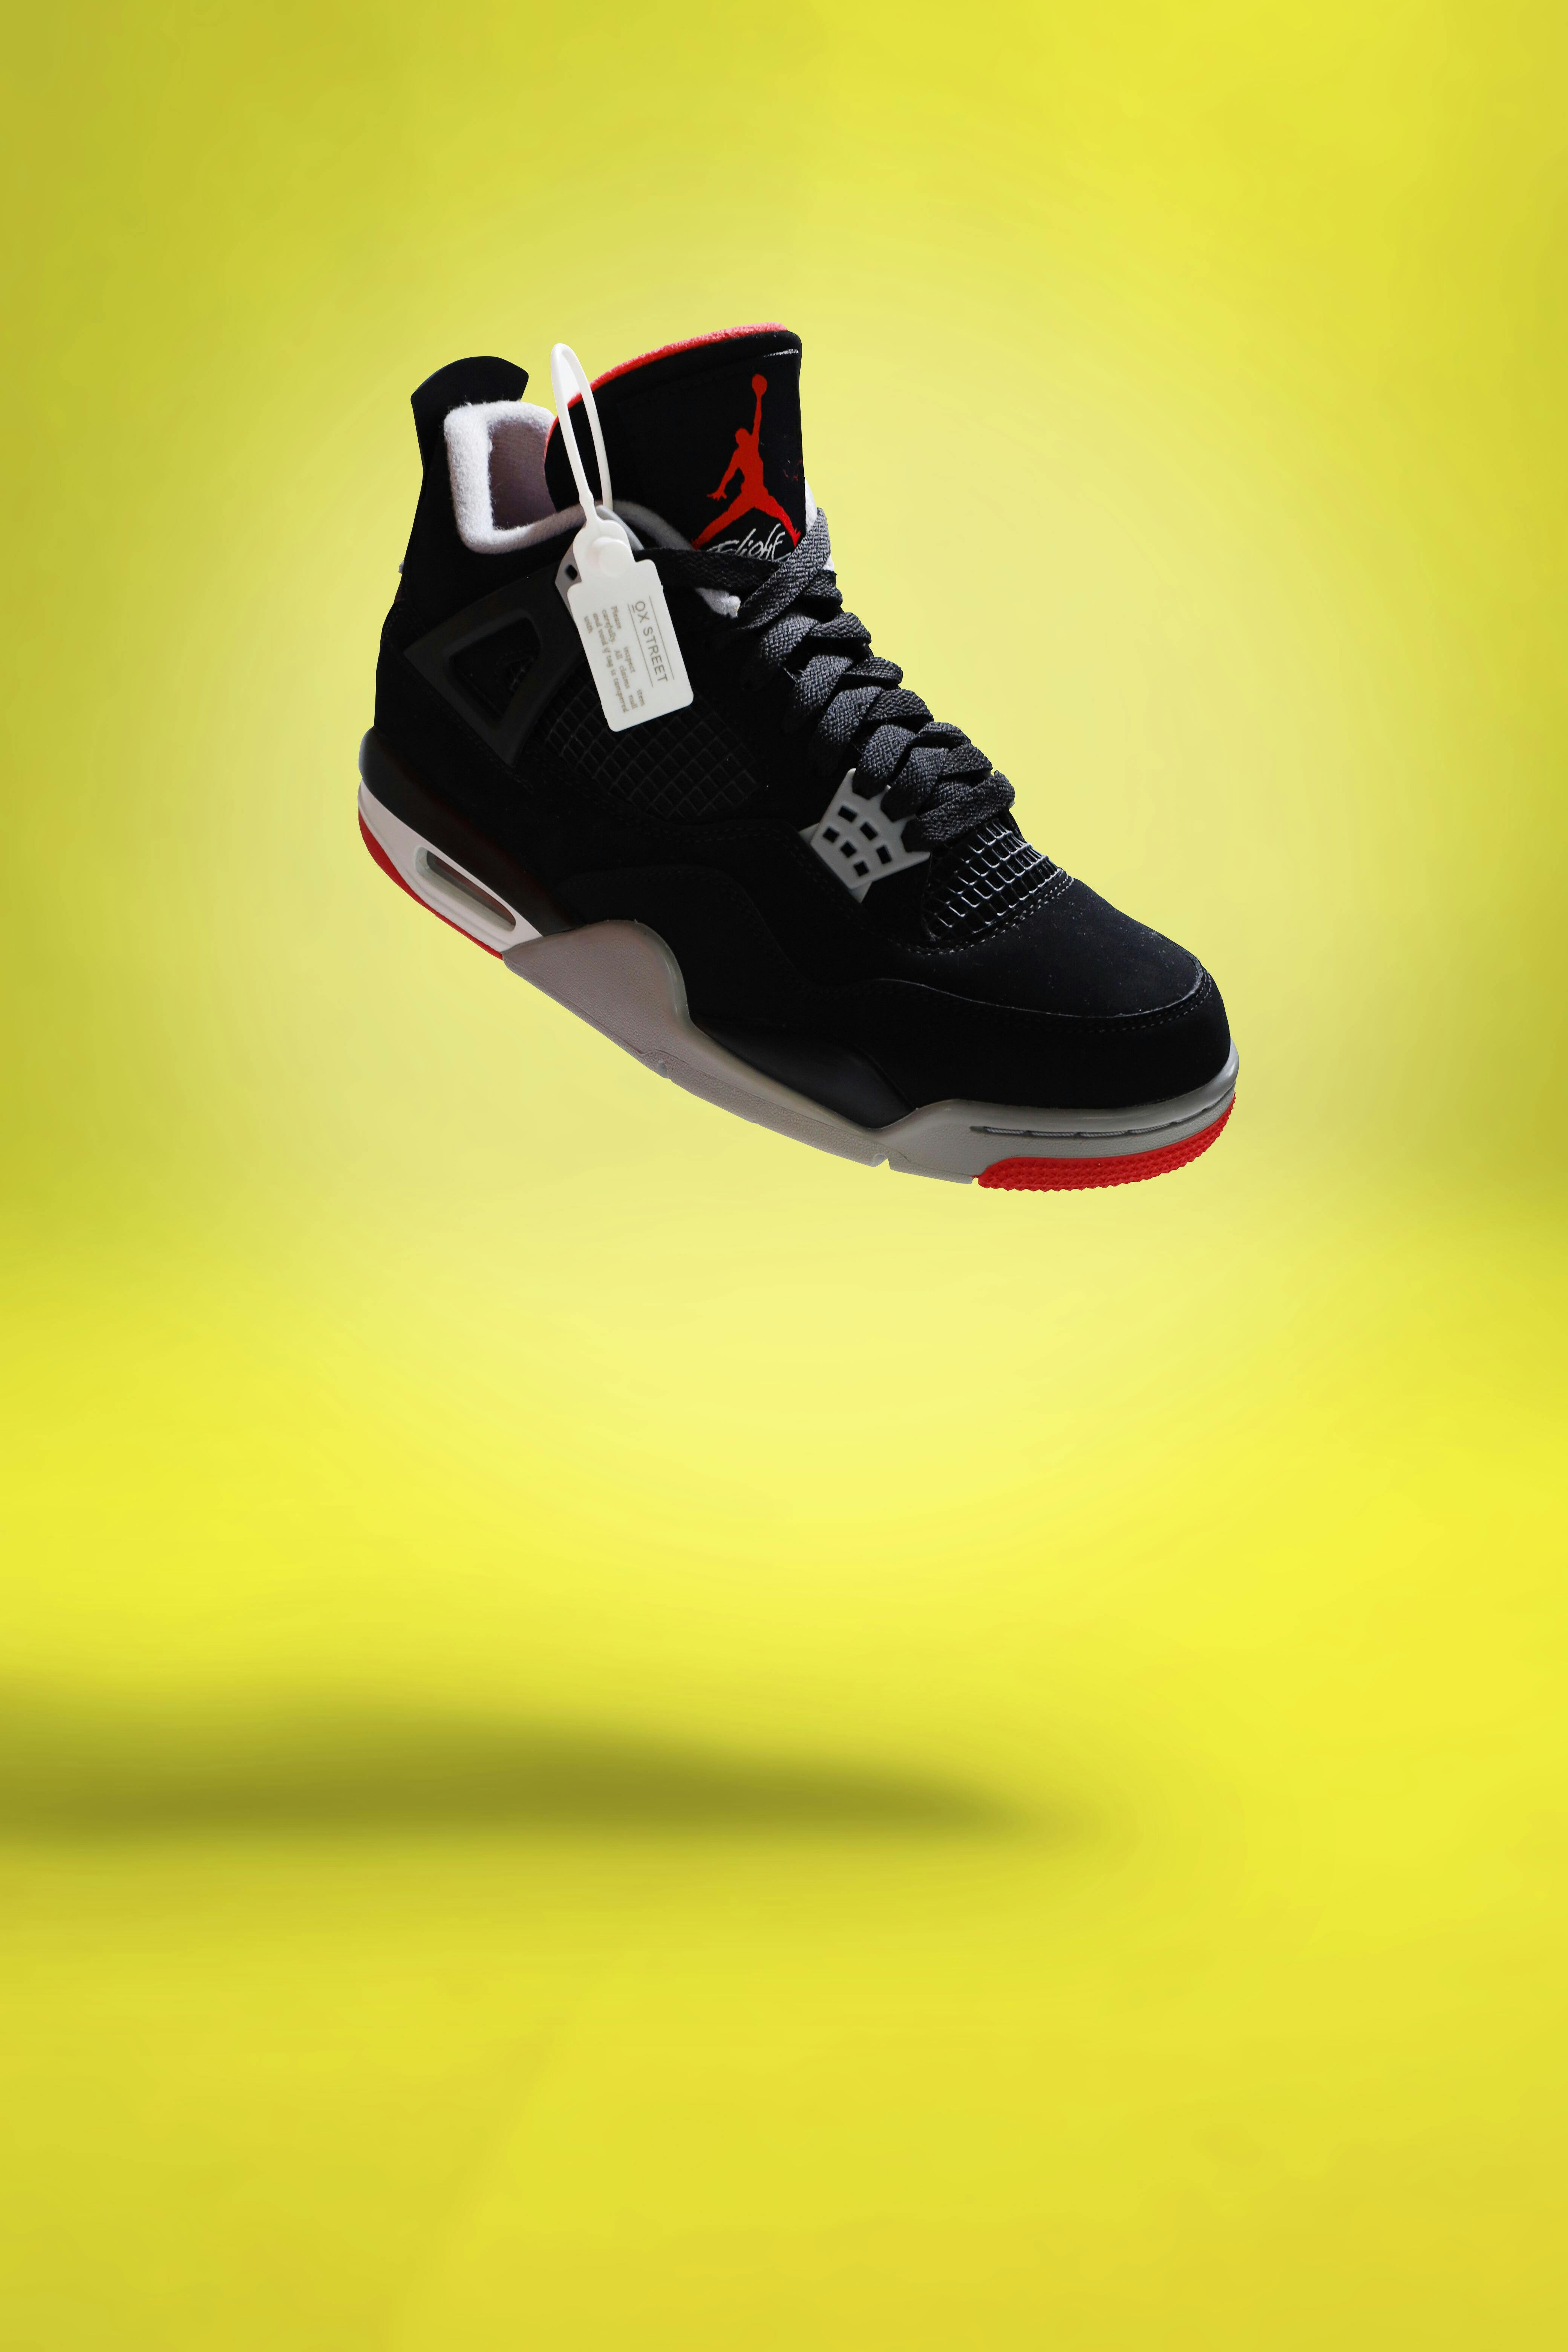 suerte calentar Cósmico Jordan Shoes Photos, Download The BEST Free Jordan Shoes Stock Photos & HD  Images